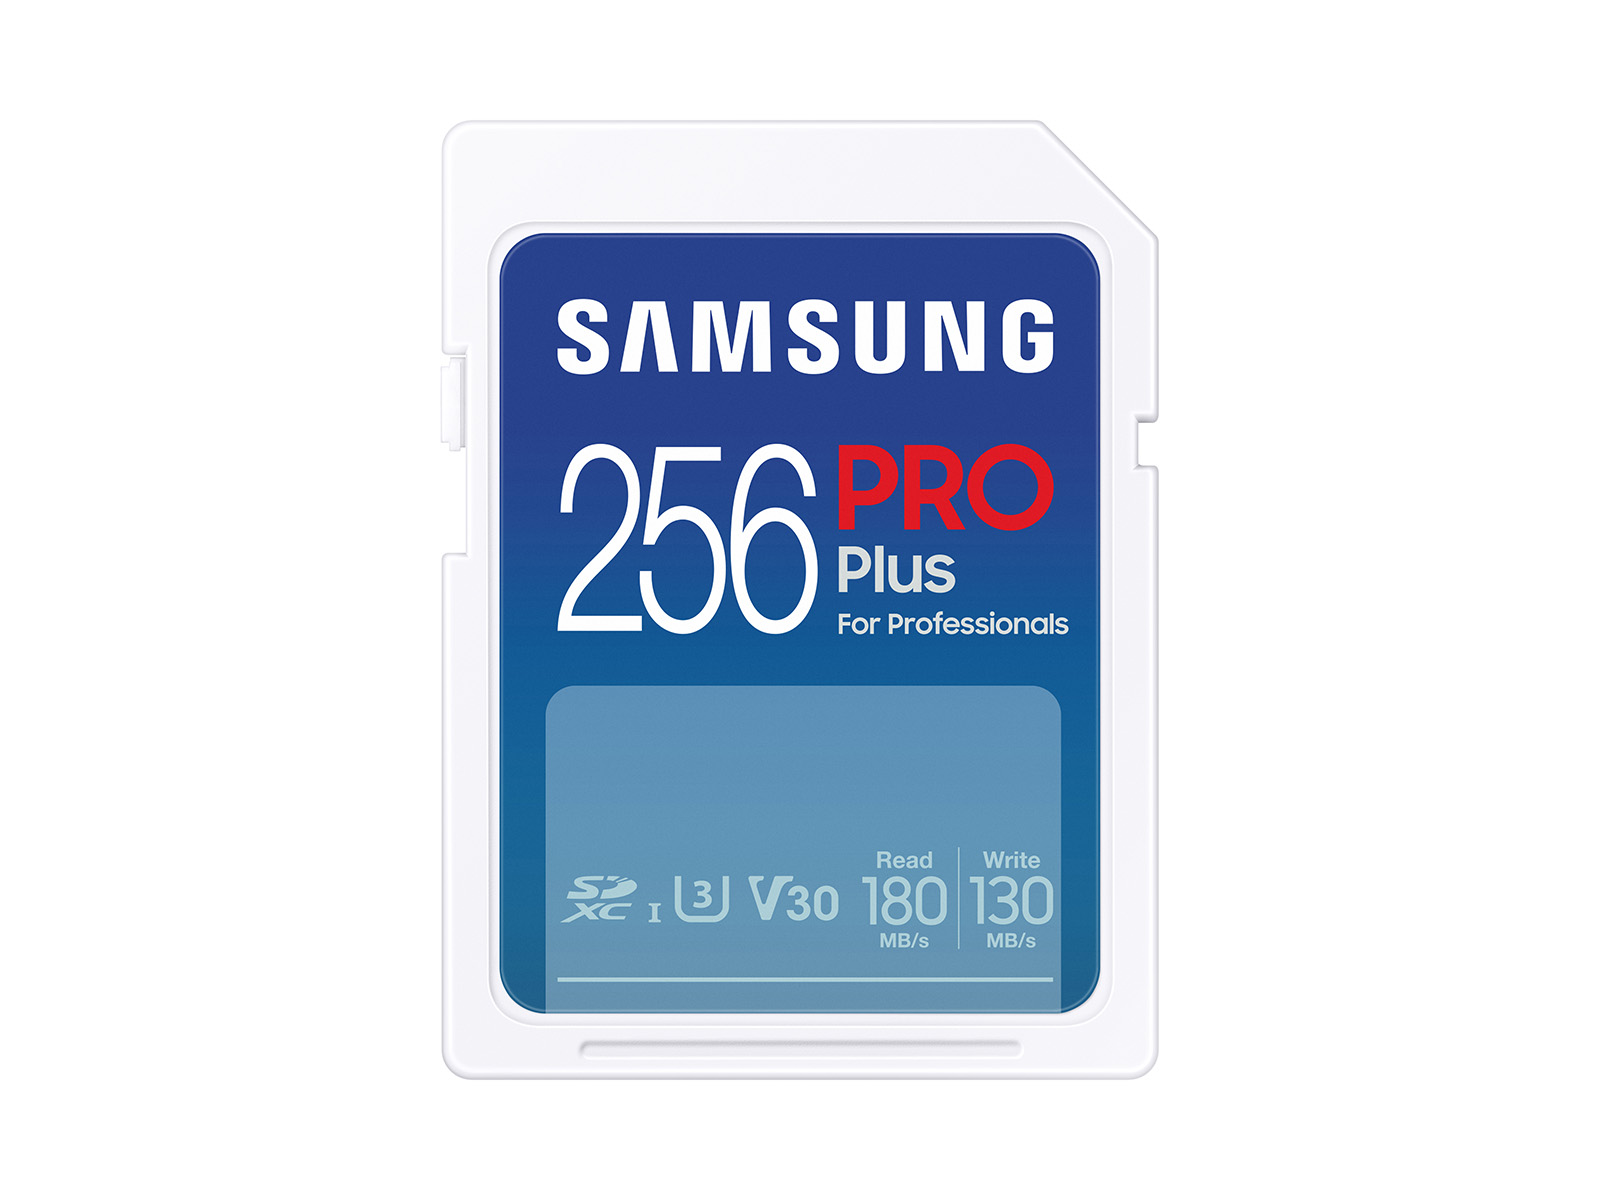 Voorzitter herwinnen Regeneratie 256GB PRO Plus Full Size SDXC Memory Card | Samsung US